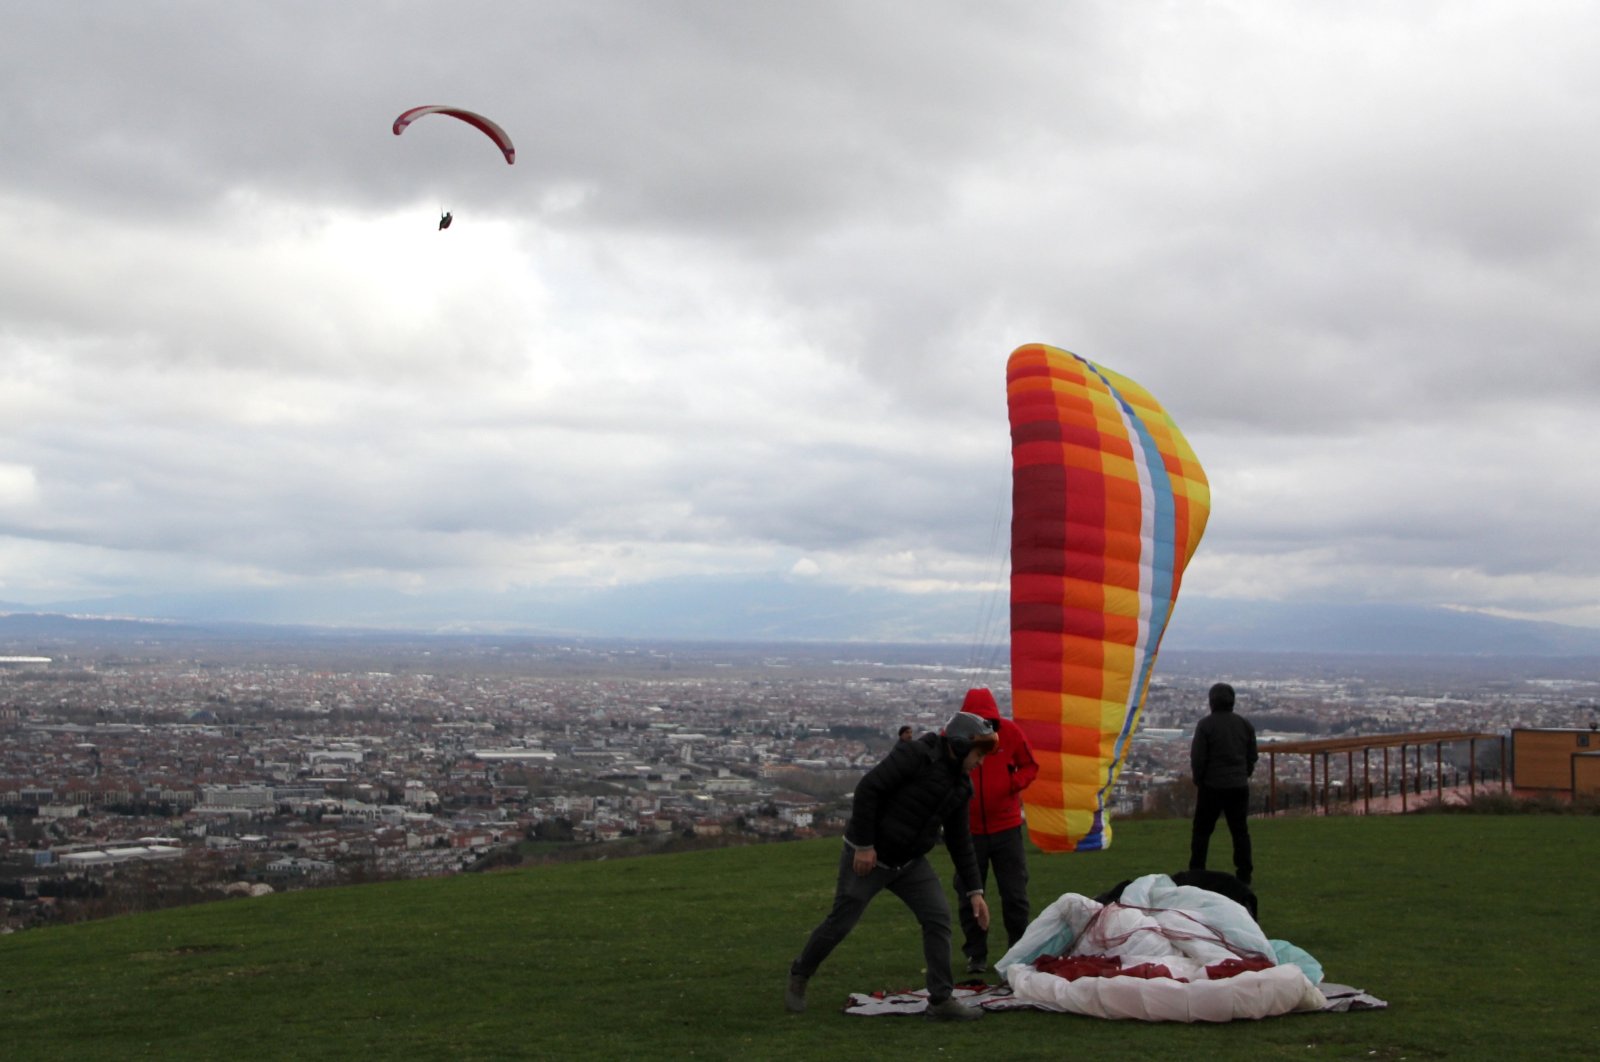 Sakarya hosts paragliders across Türkiye despite cold | Daily Sabah - Daily Sabah